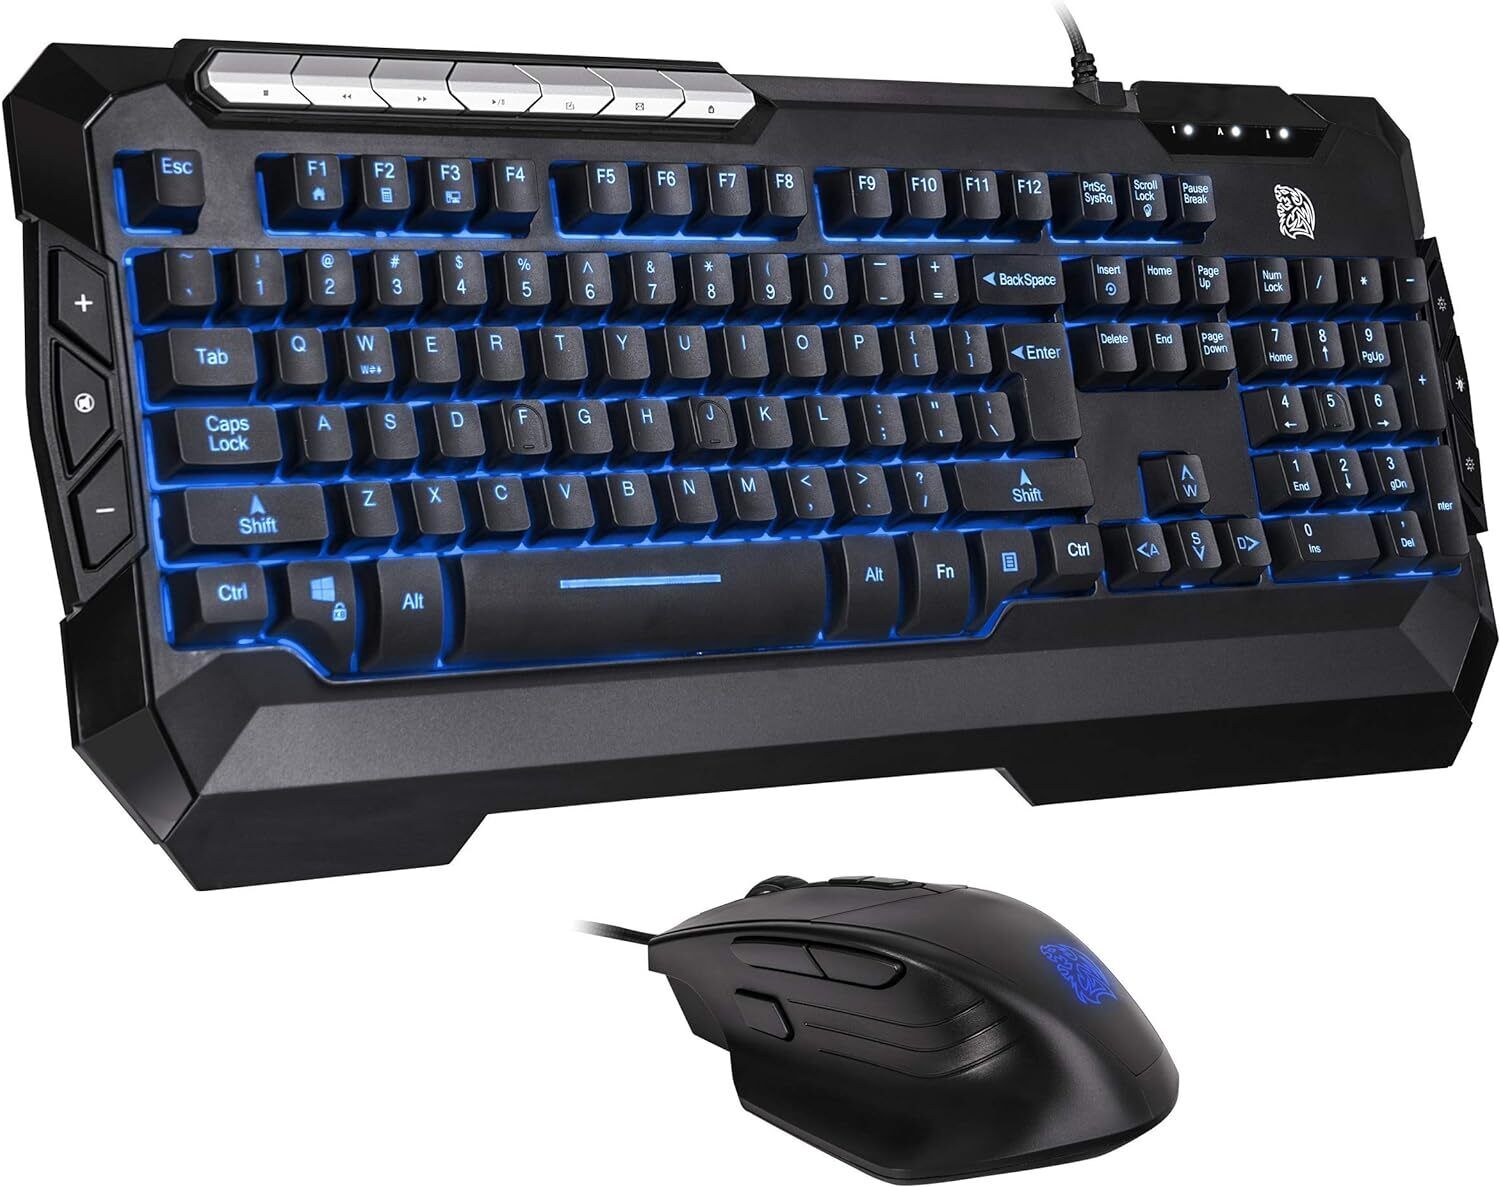 Thermaltake TT eSports Commander Gaming Keyboard and Gaming Mouse - Black